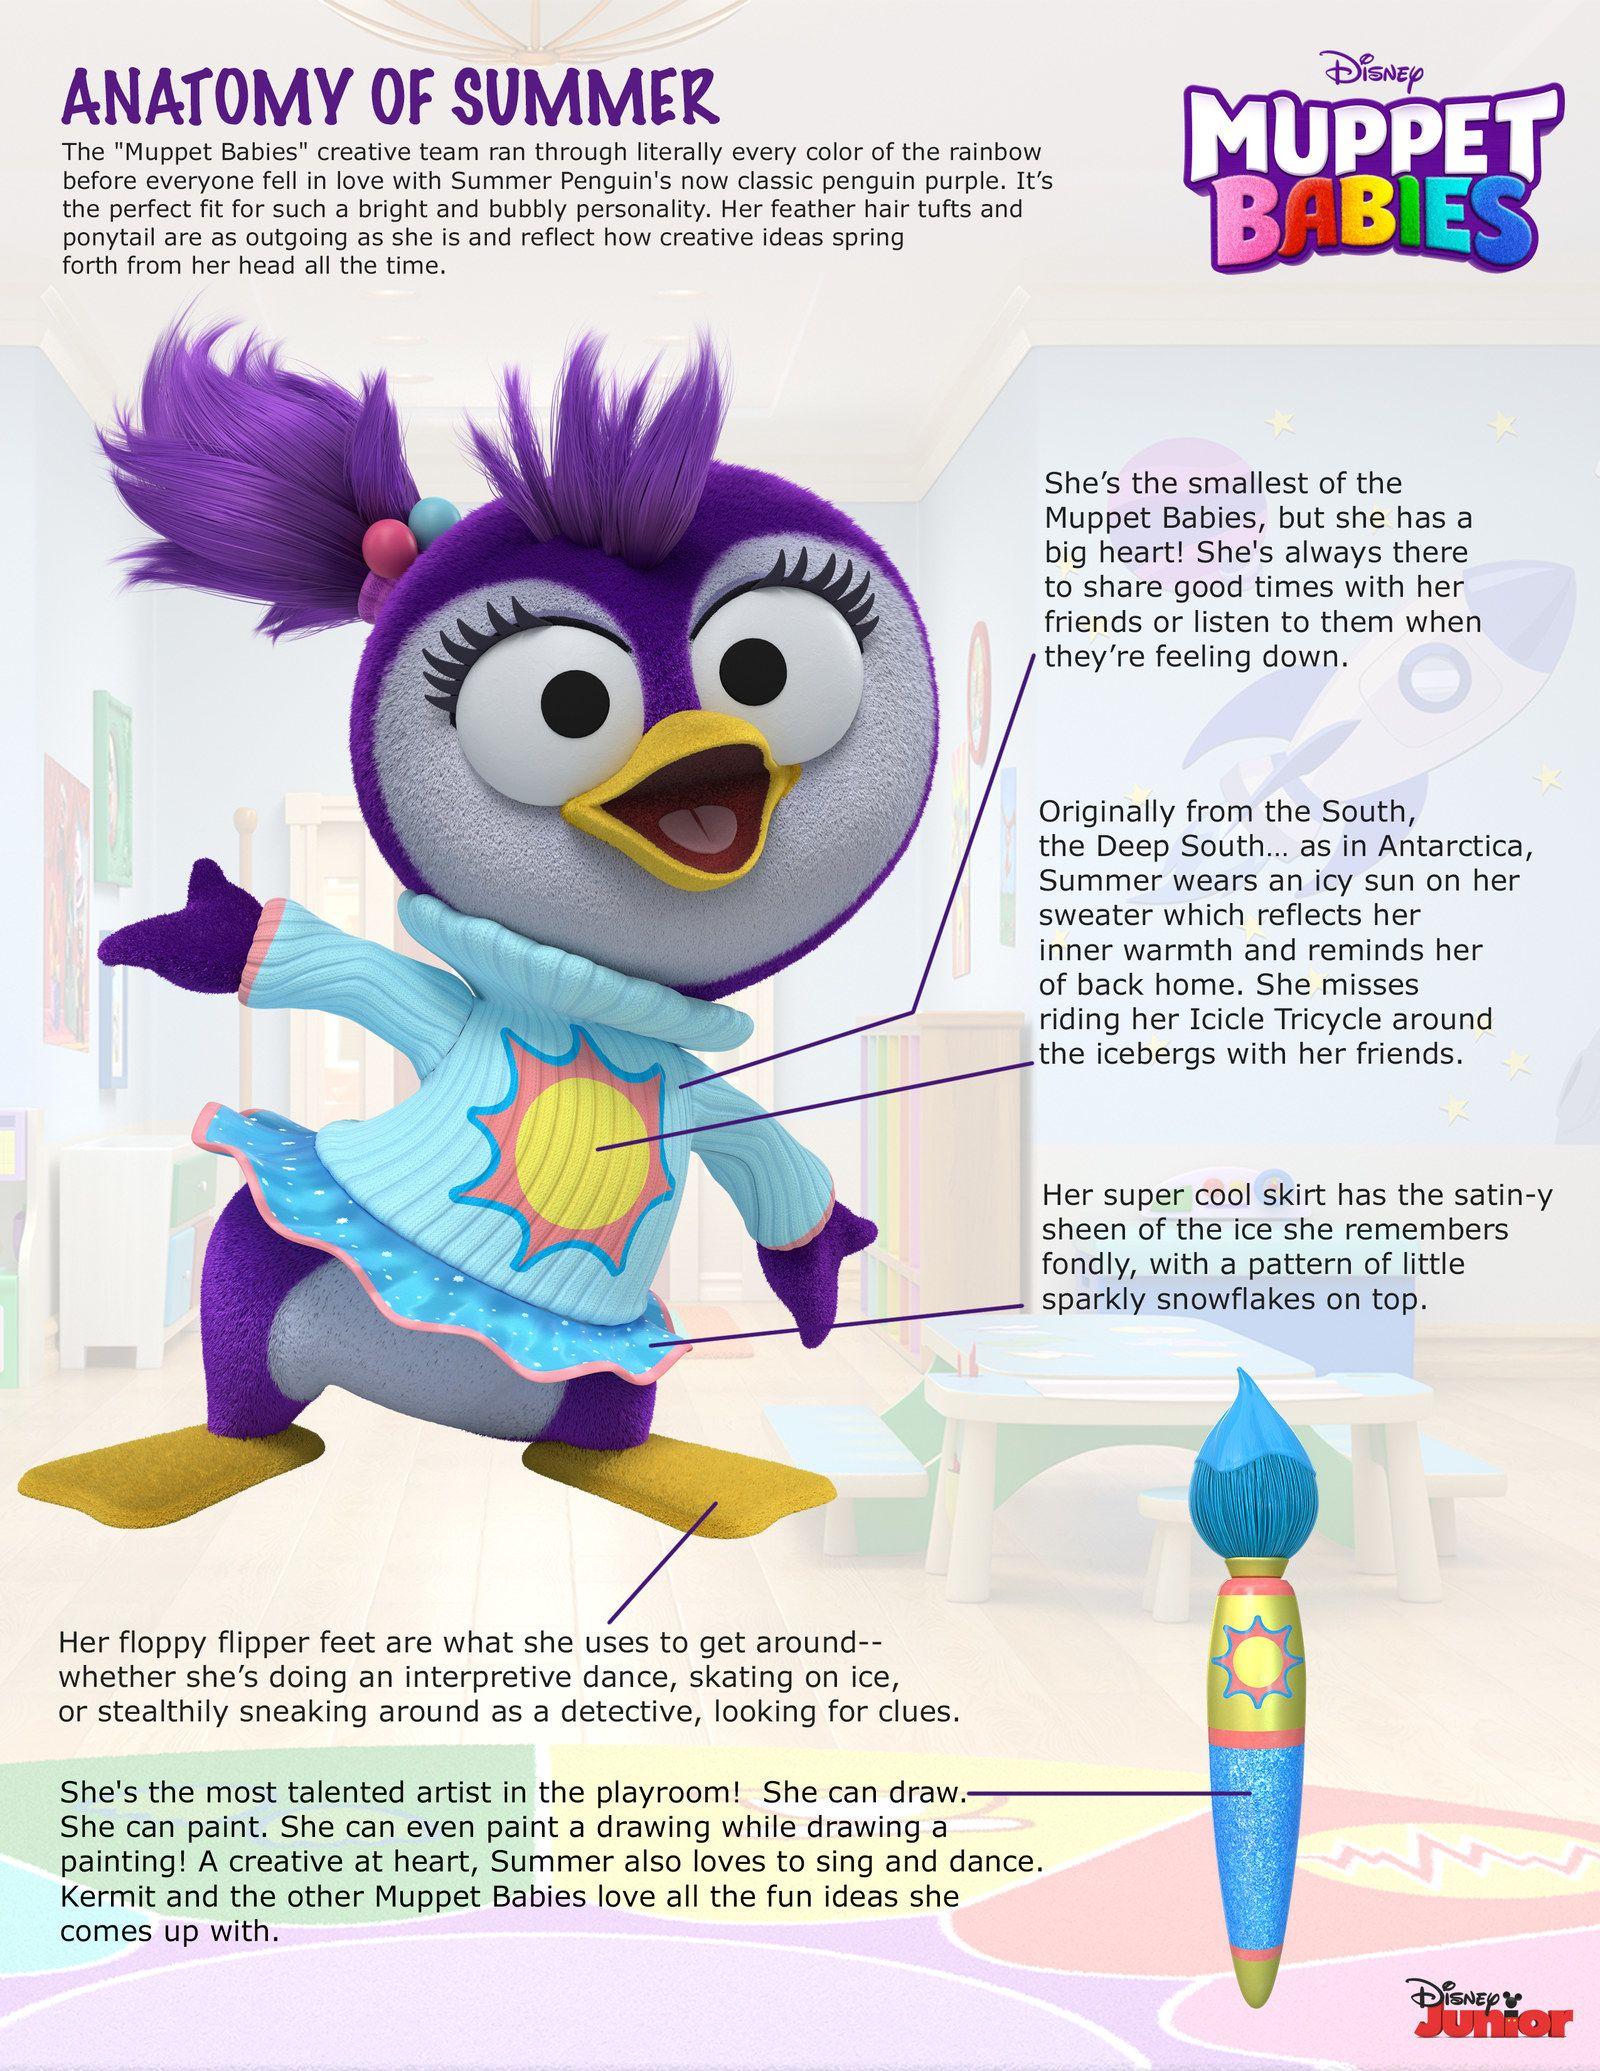 Disney Junior Muppet Babies Logo - Image - Summer press sheet, Disney Junior.jpg | The Parody Wiki ...